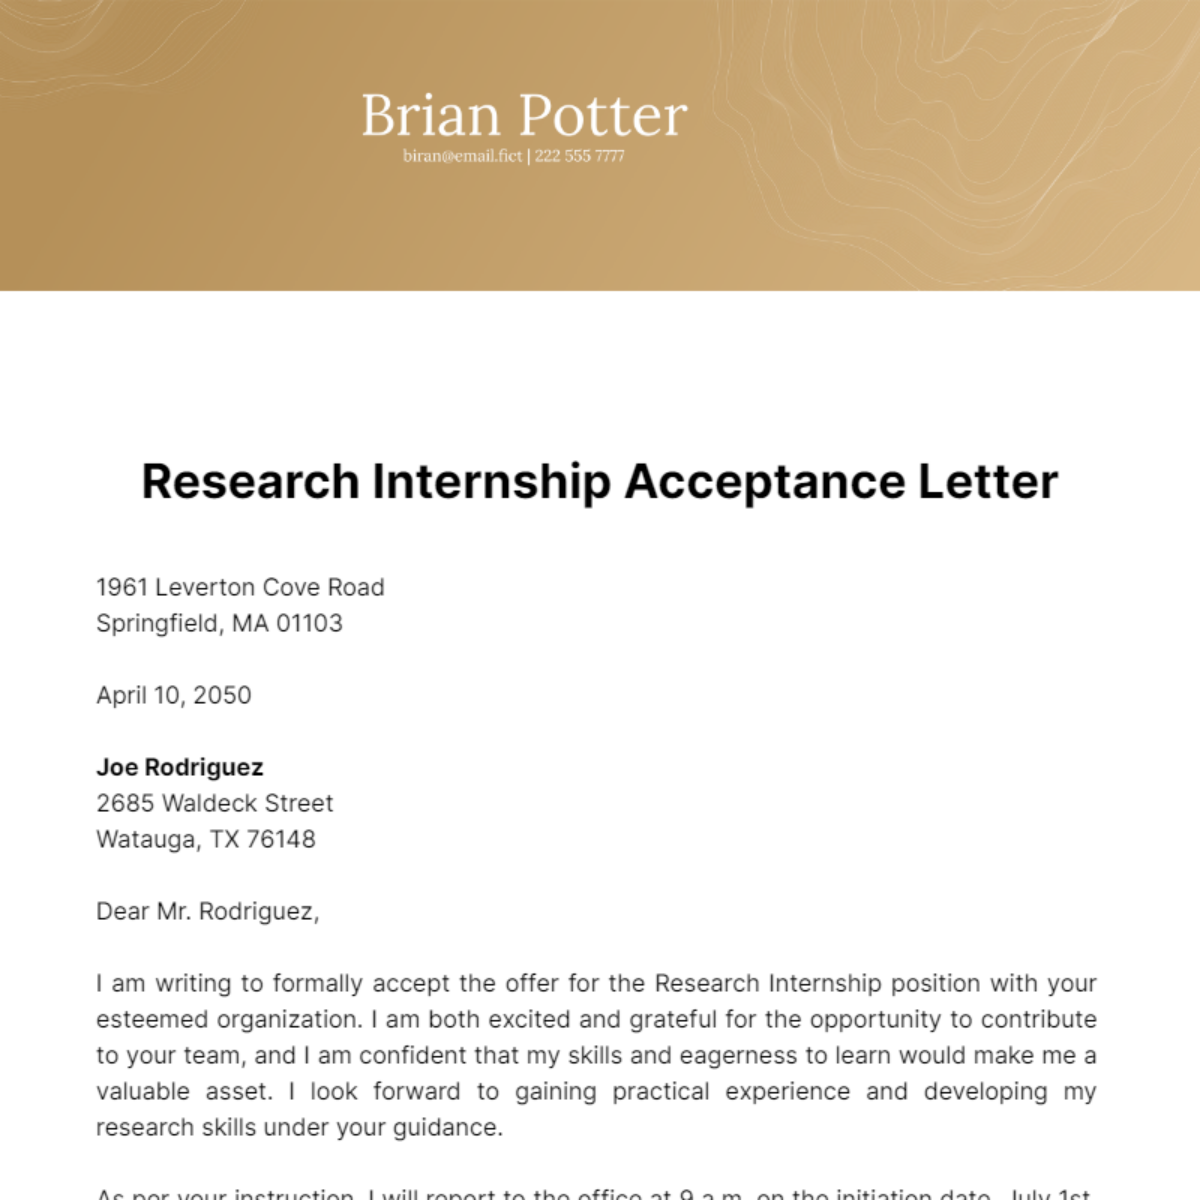 Research Internship Acceptance Letter Template